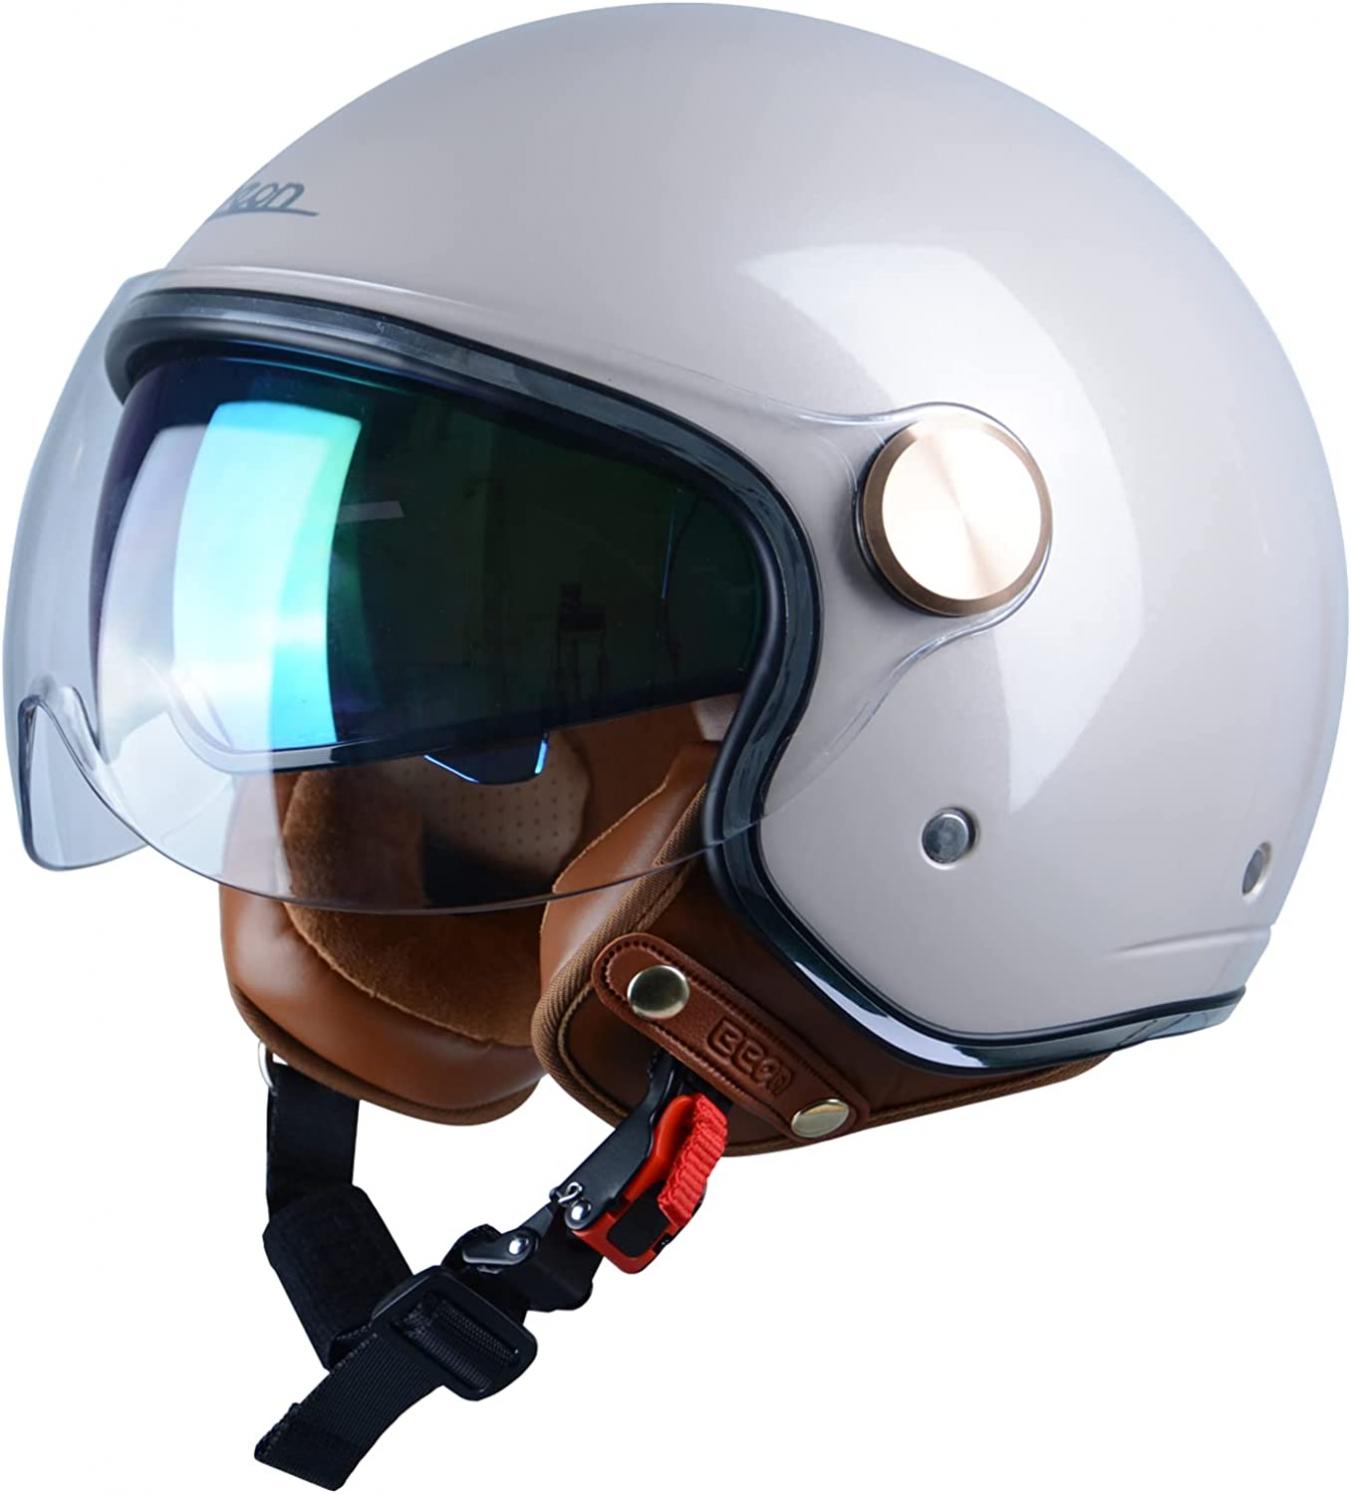 BEON Open Face Motorcycle Helmet for Adults, DOT Approved,3/4 Retro Vespa Helmet, Dual Visors Men’s and Women’s Motorbike Casco for Moped Cruiser Bobber and Chopper